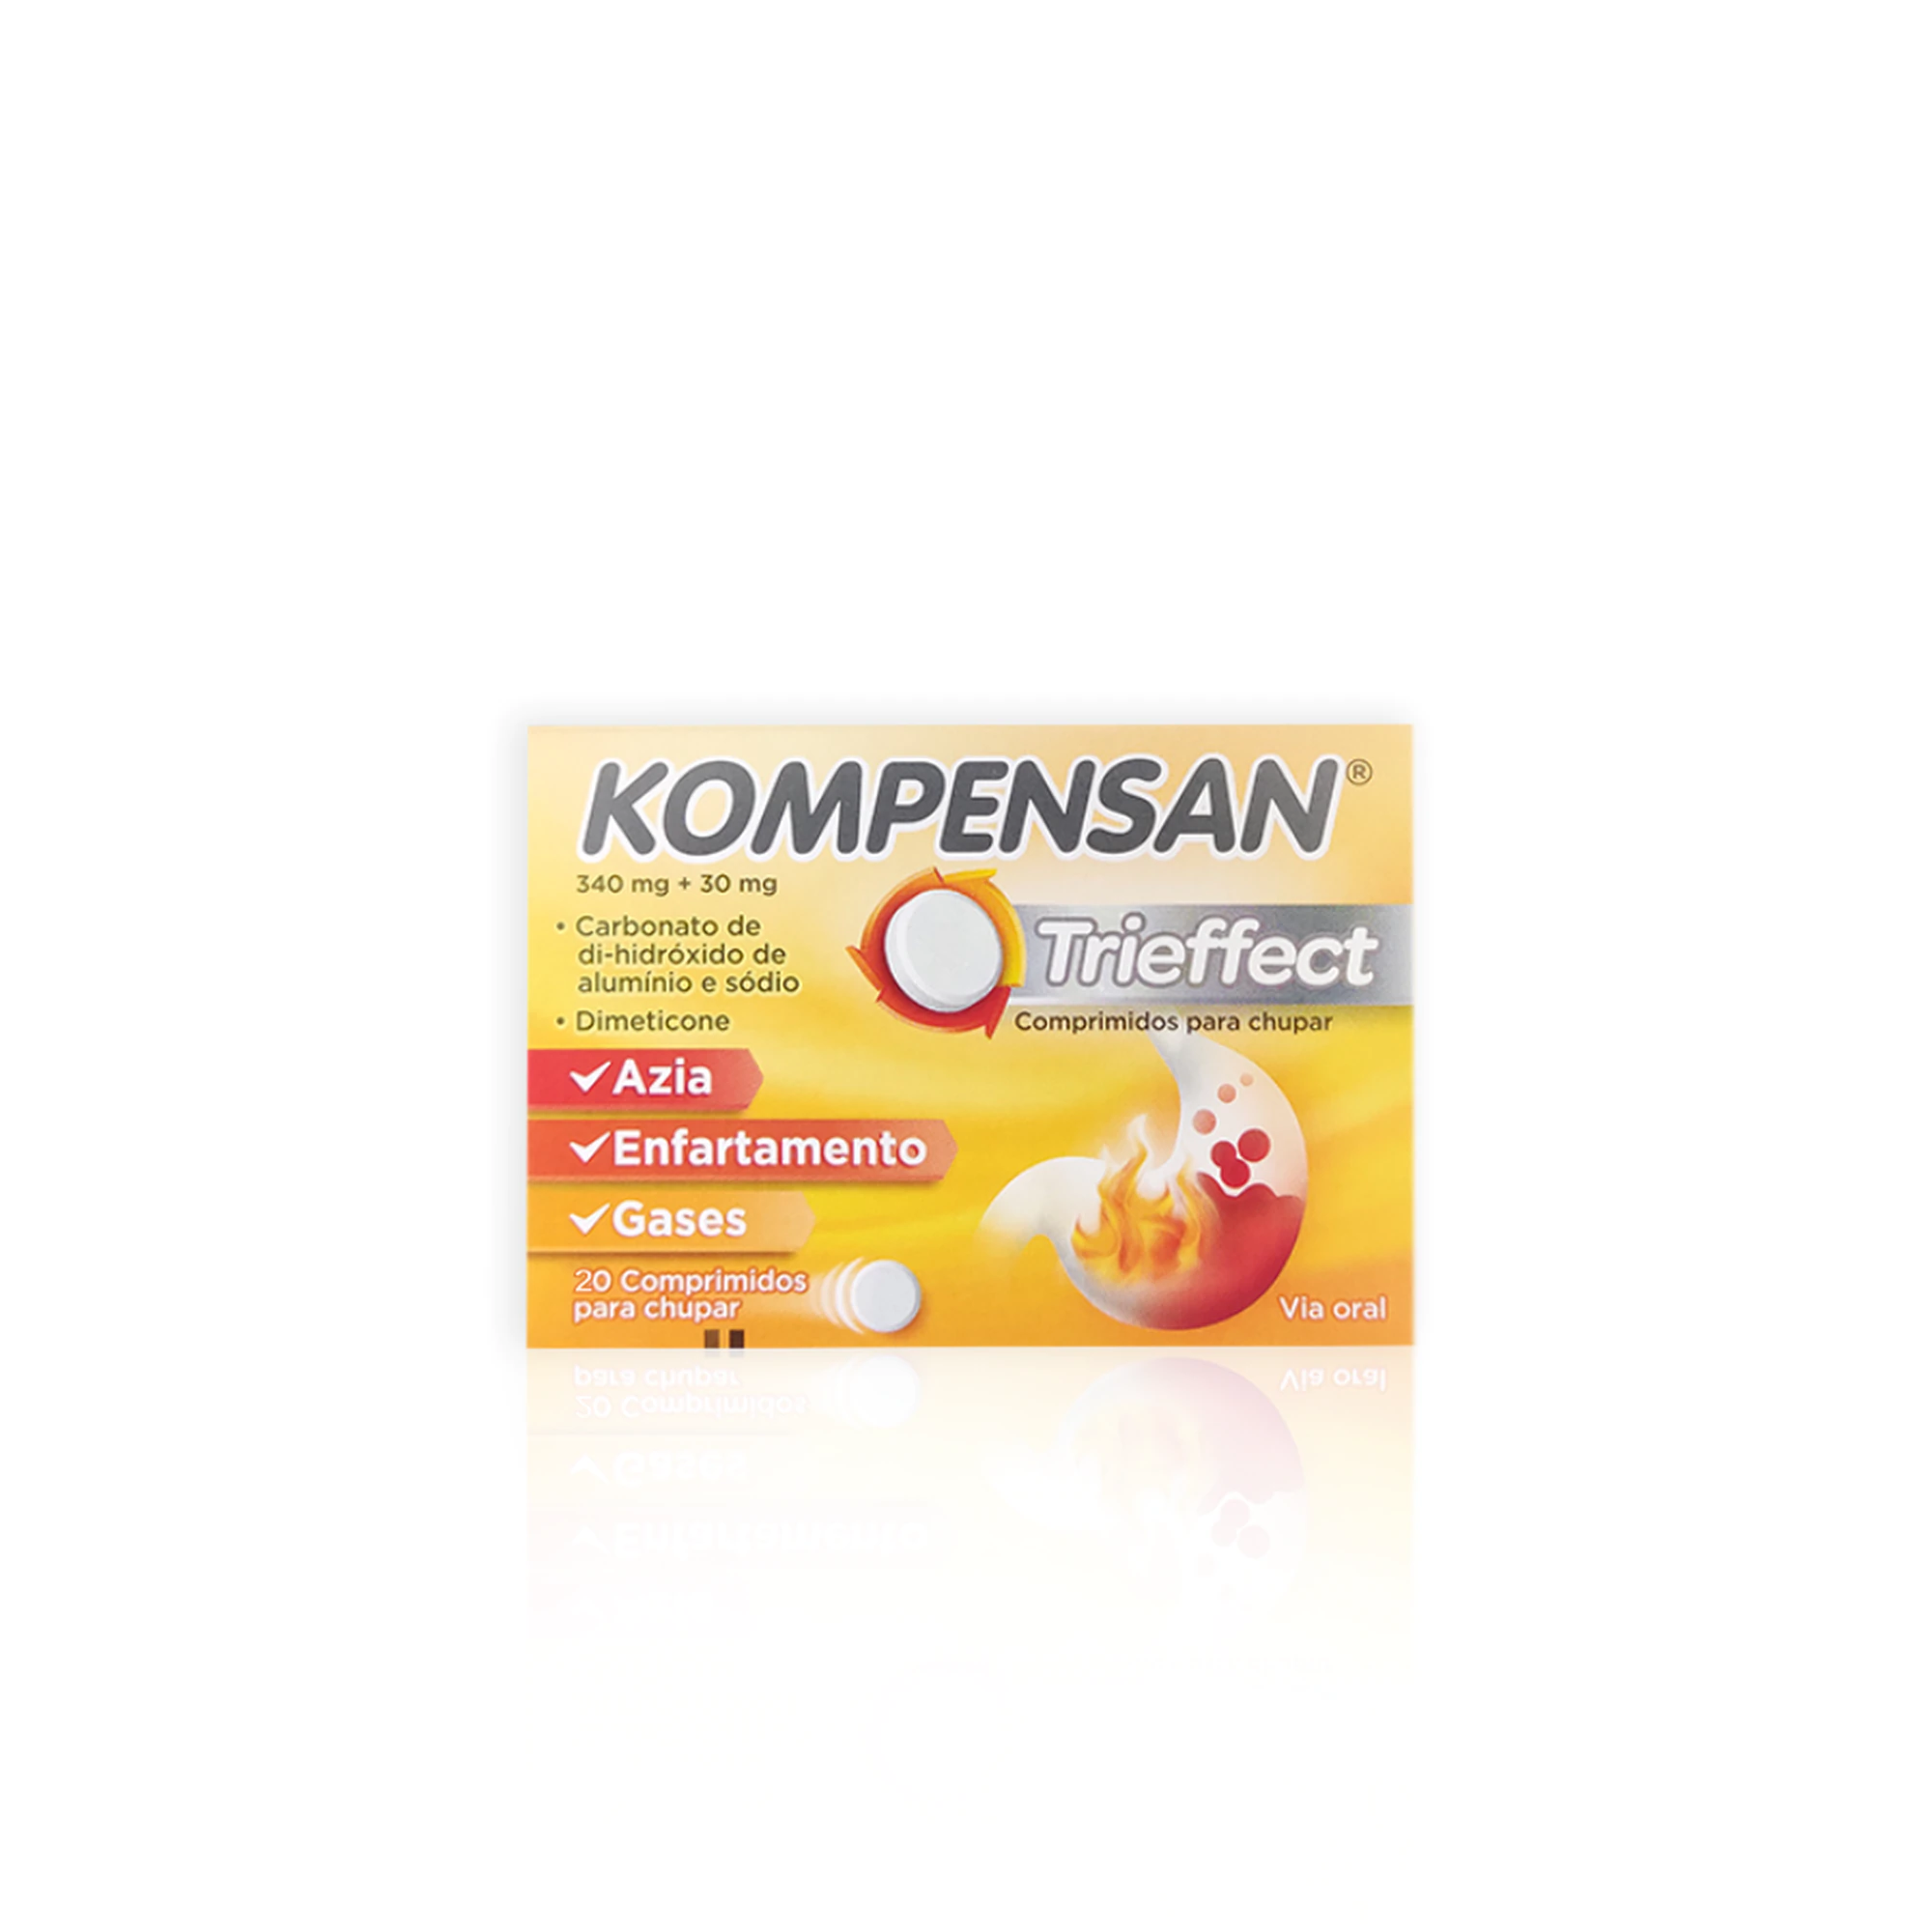 Kompensan Trieffect, 340/30 mg x20 Comprimidos Mastigáveis 